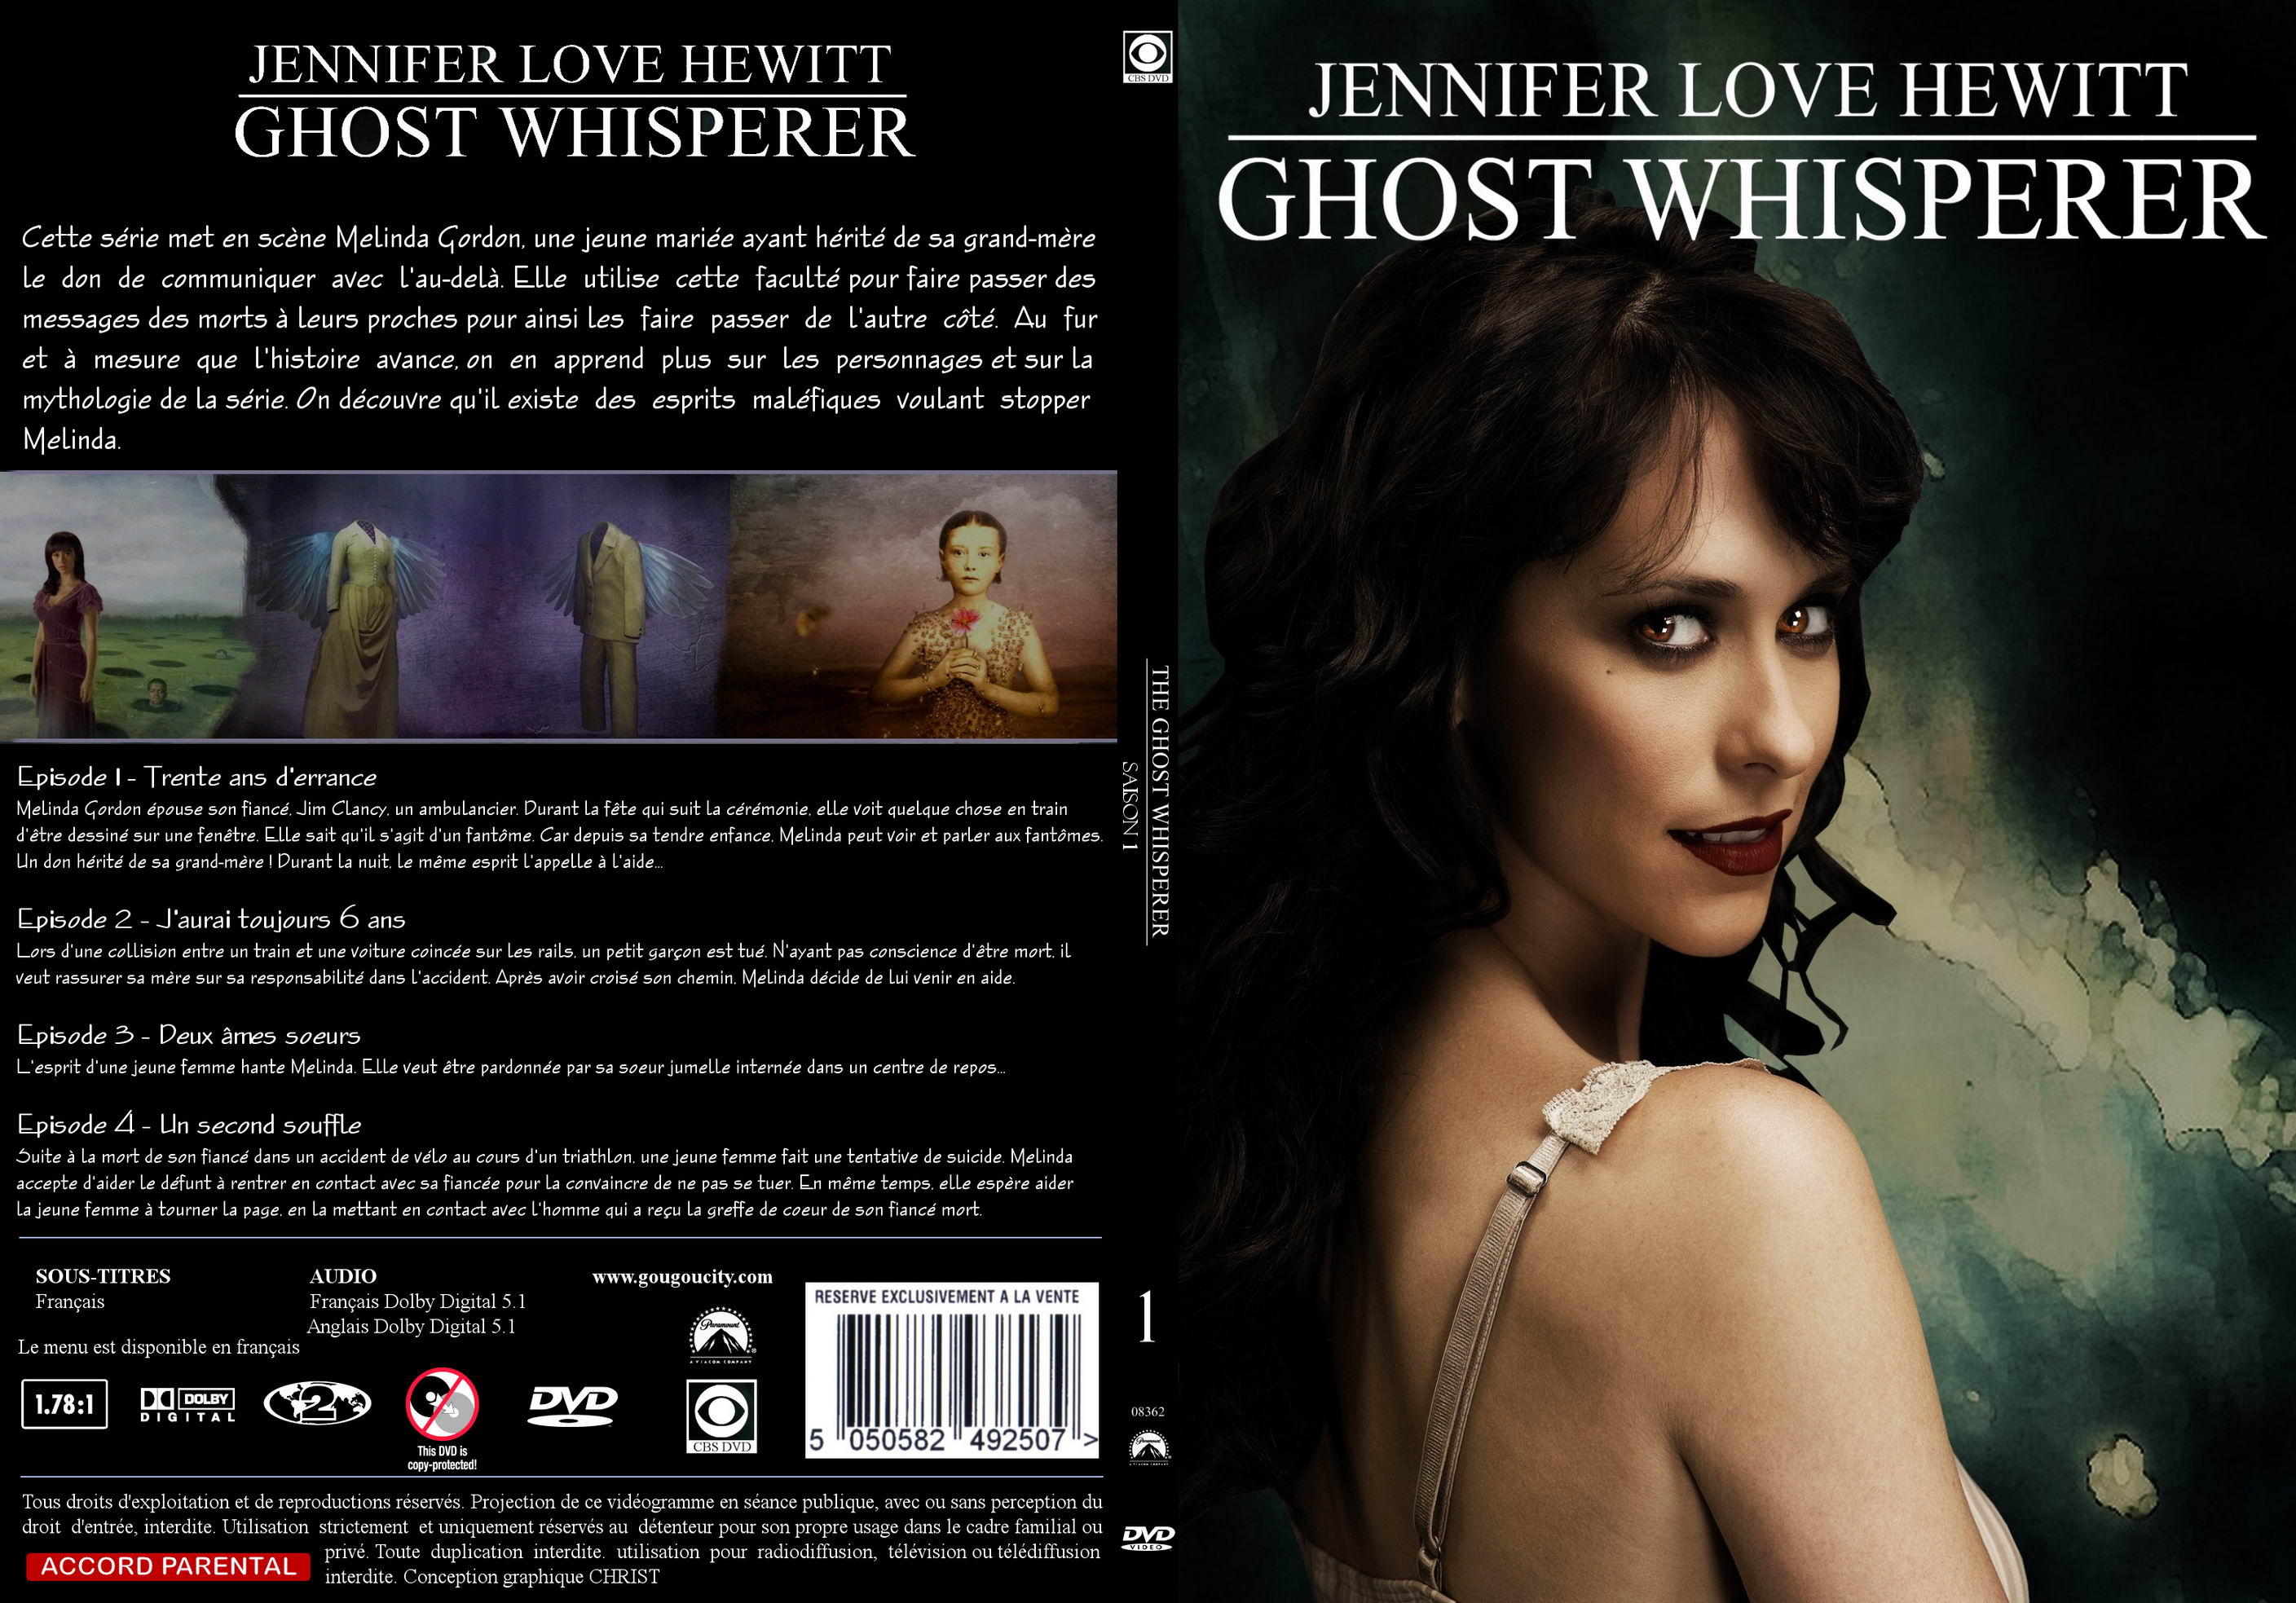 Ghost Whisperer Image Femalecelebrity